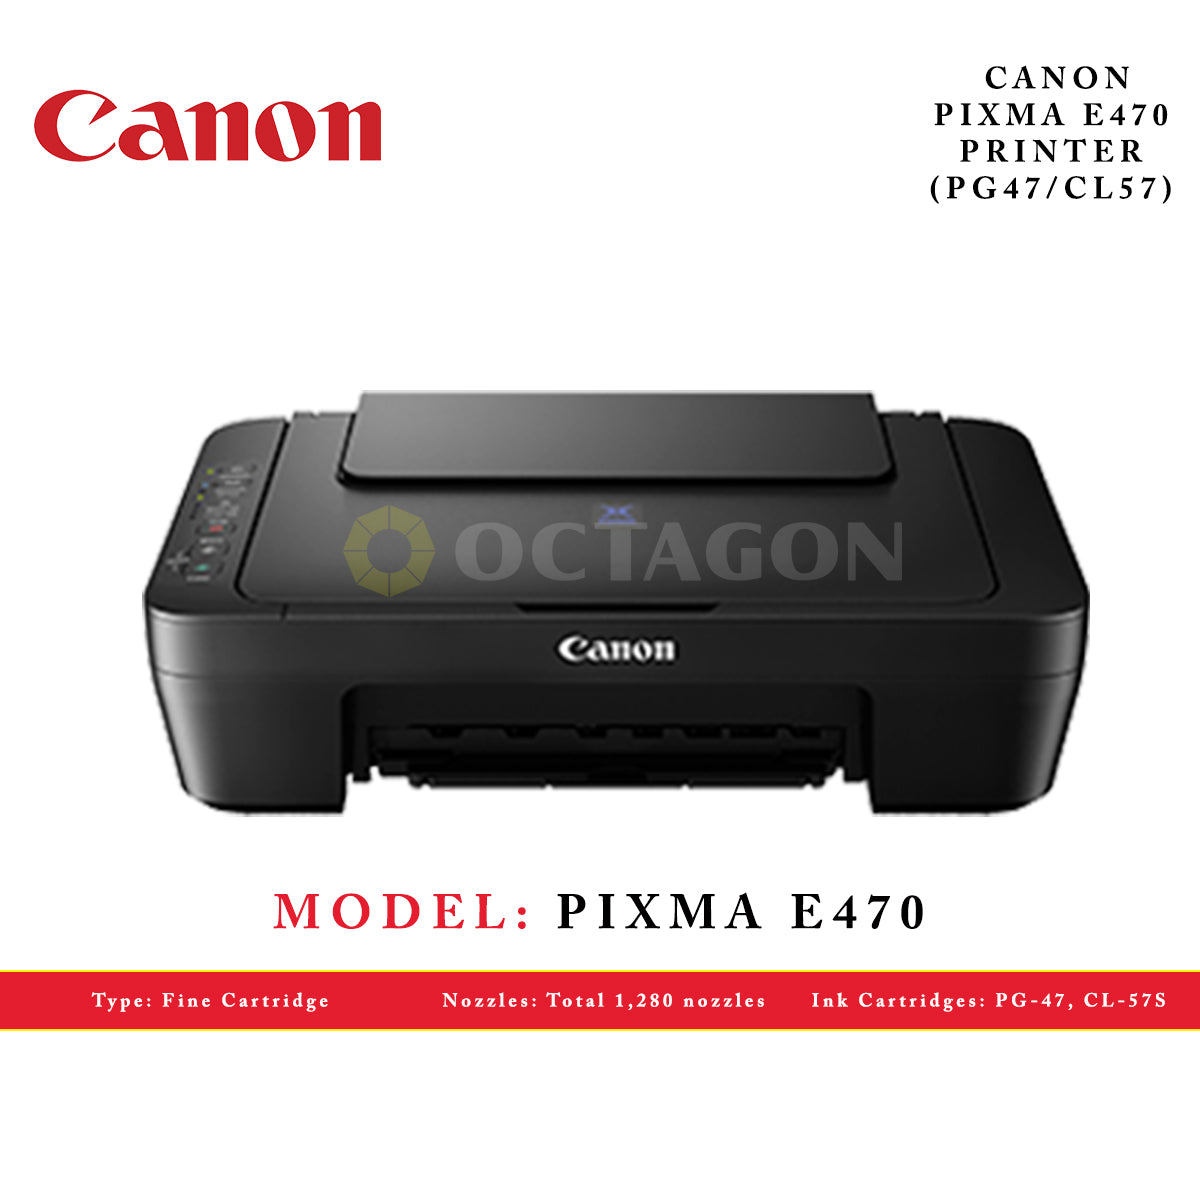 CANON PIXMA E470 PRINTER (PG47/CL57)